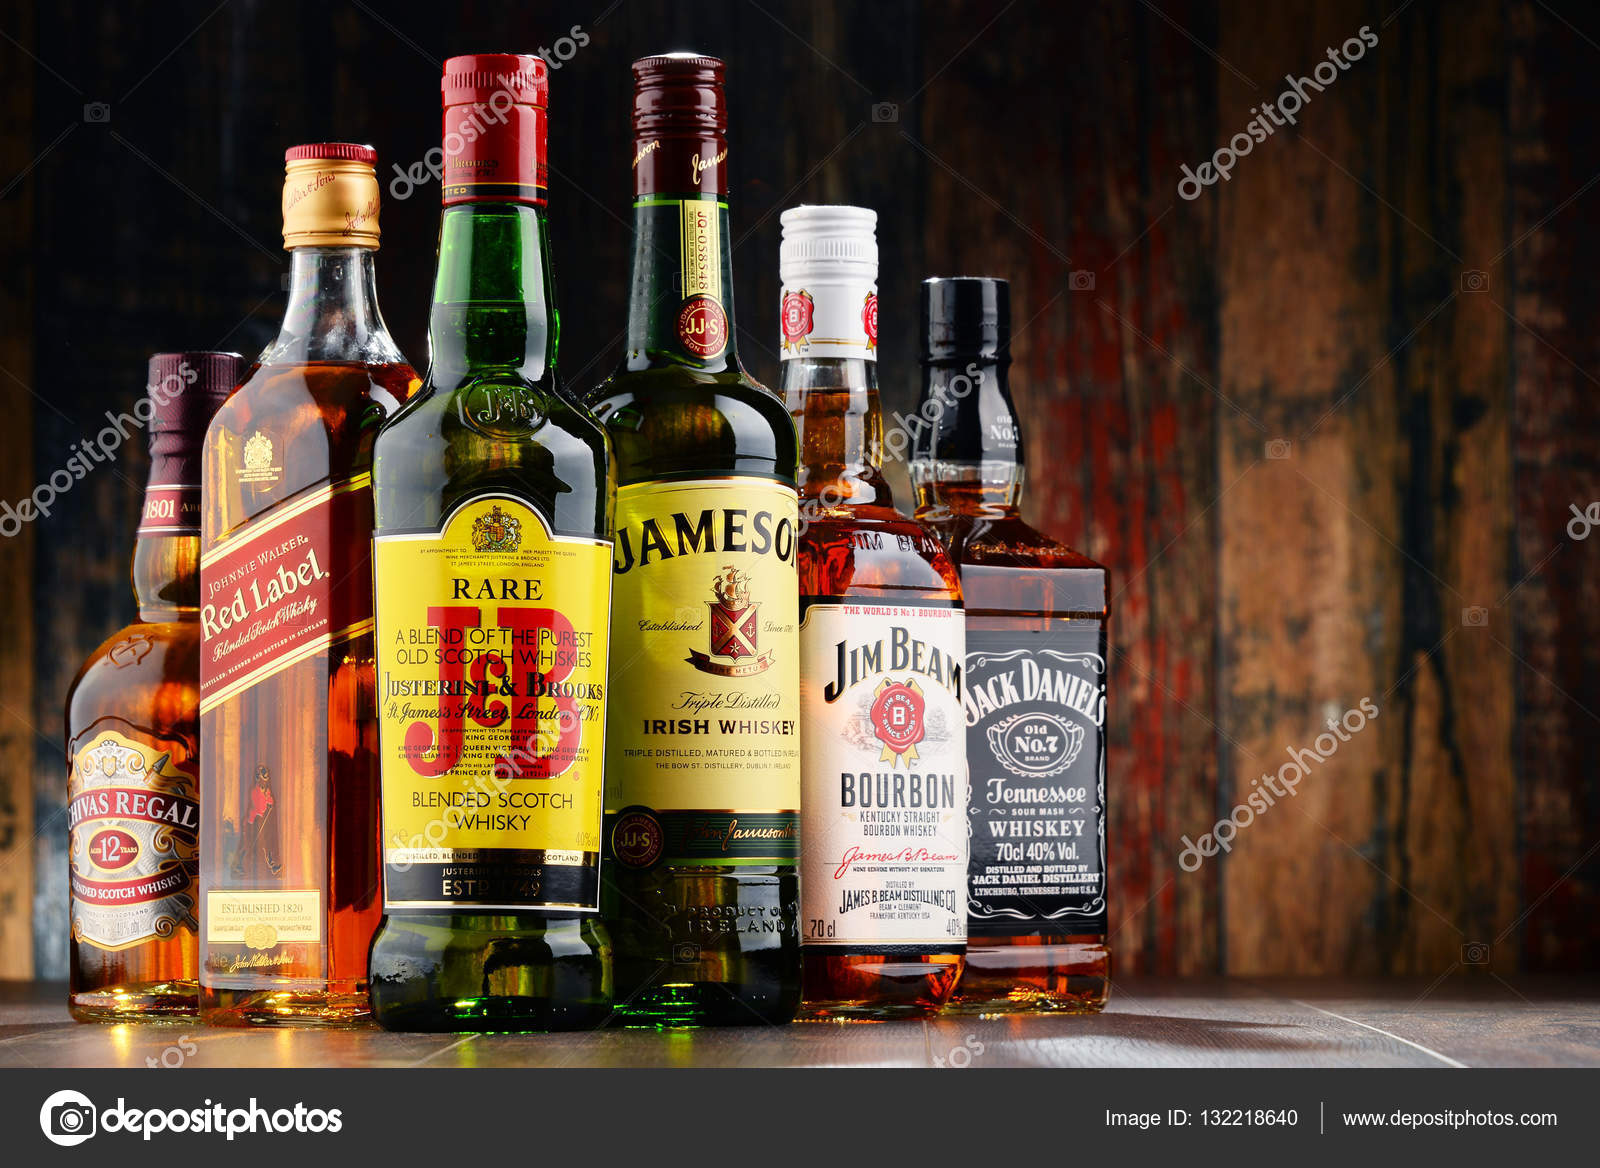 Presentator Scorch sympathie Samenstelling met flessen van populaire whisky merken – Redactionele  stockfoto © monticello #132218640